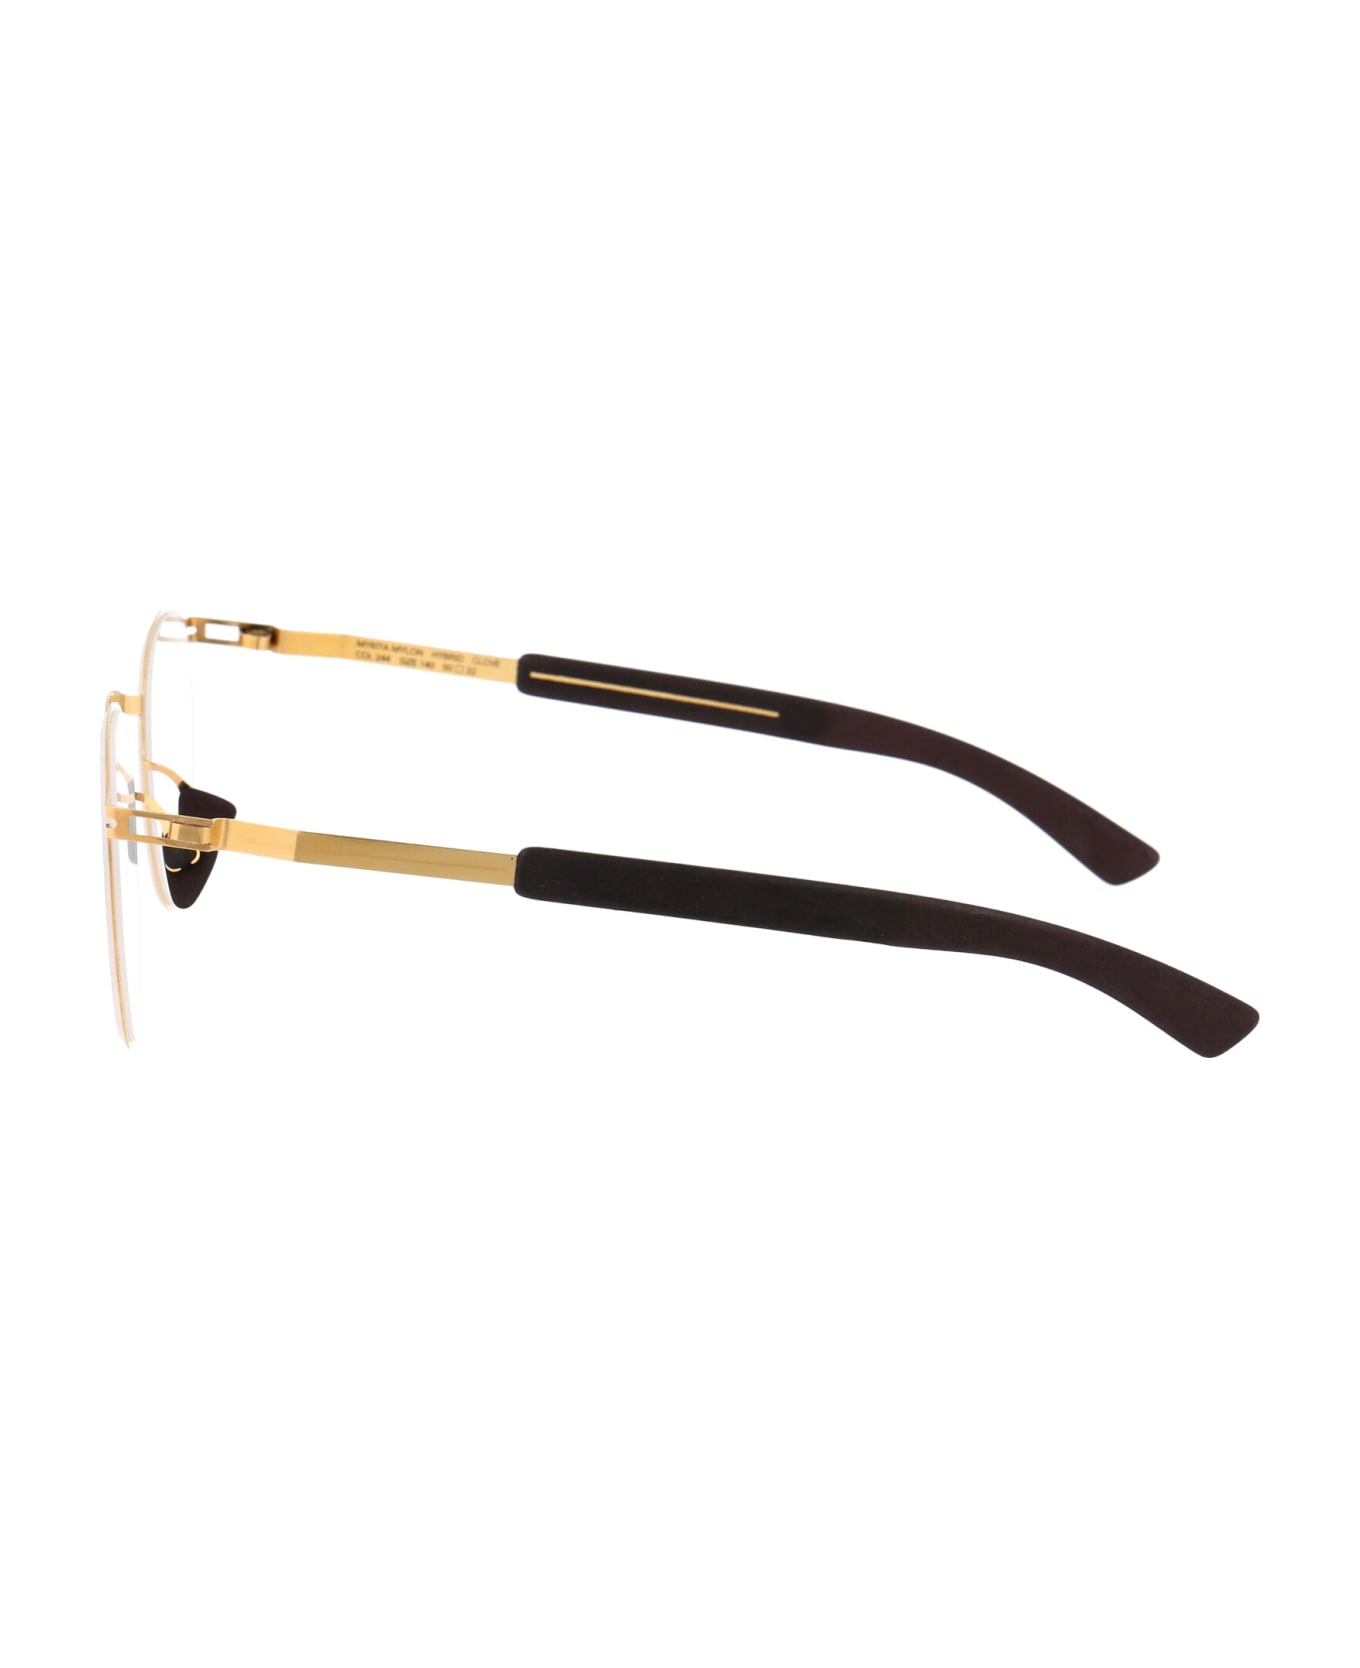 Mykita Clove Glasses - 244 MH2 Gold/Ebony Brown Clear